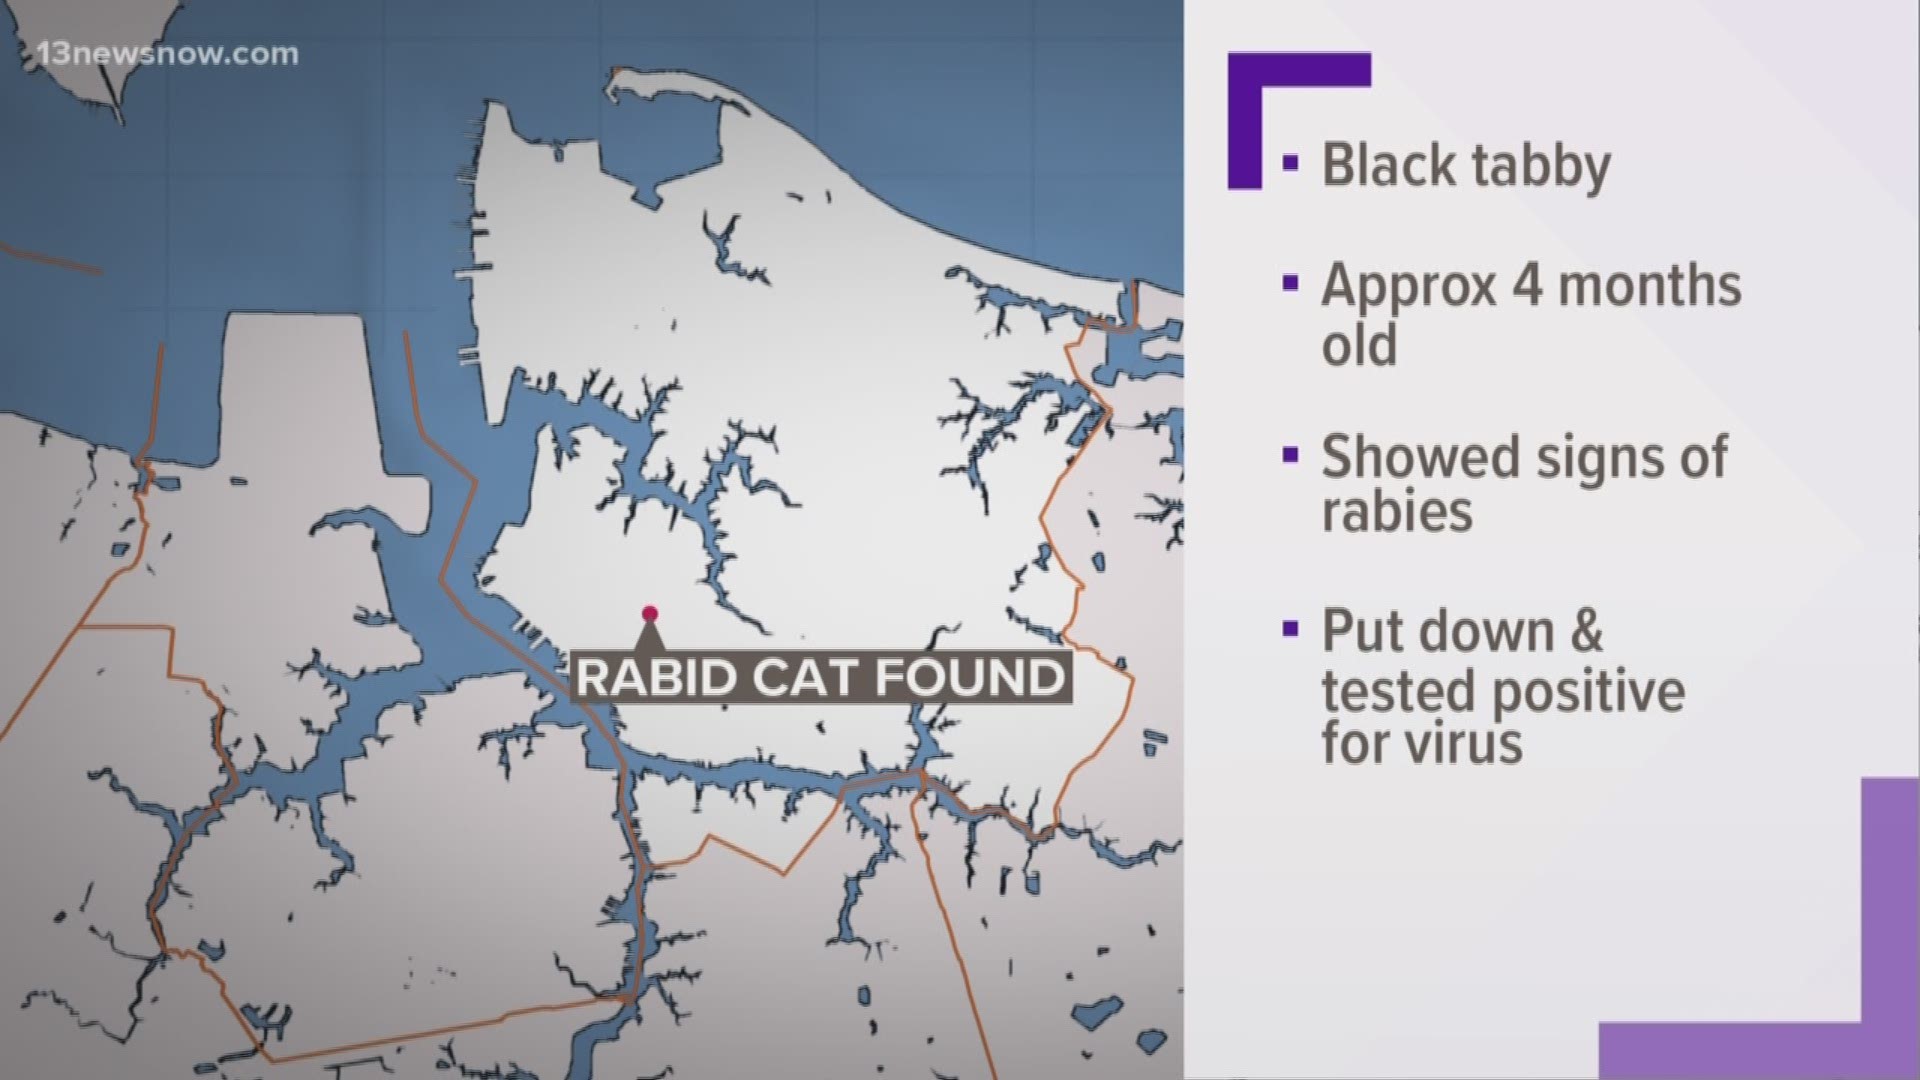 A rabid cat was found in Norfolk near 22nd Street and Llewellyn